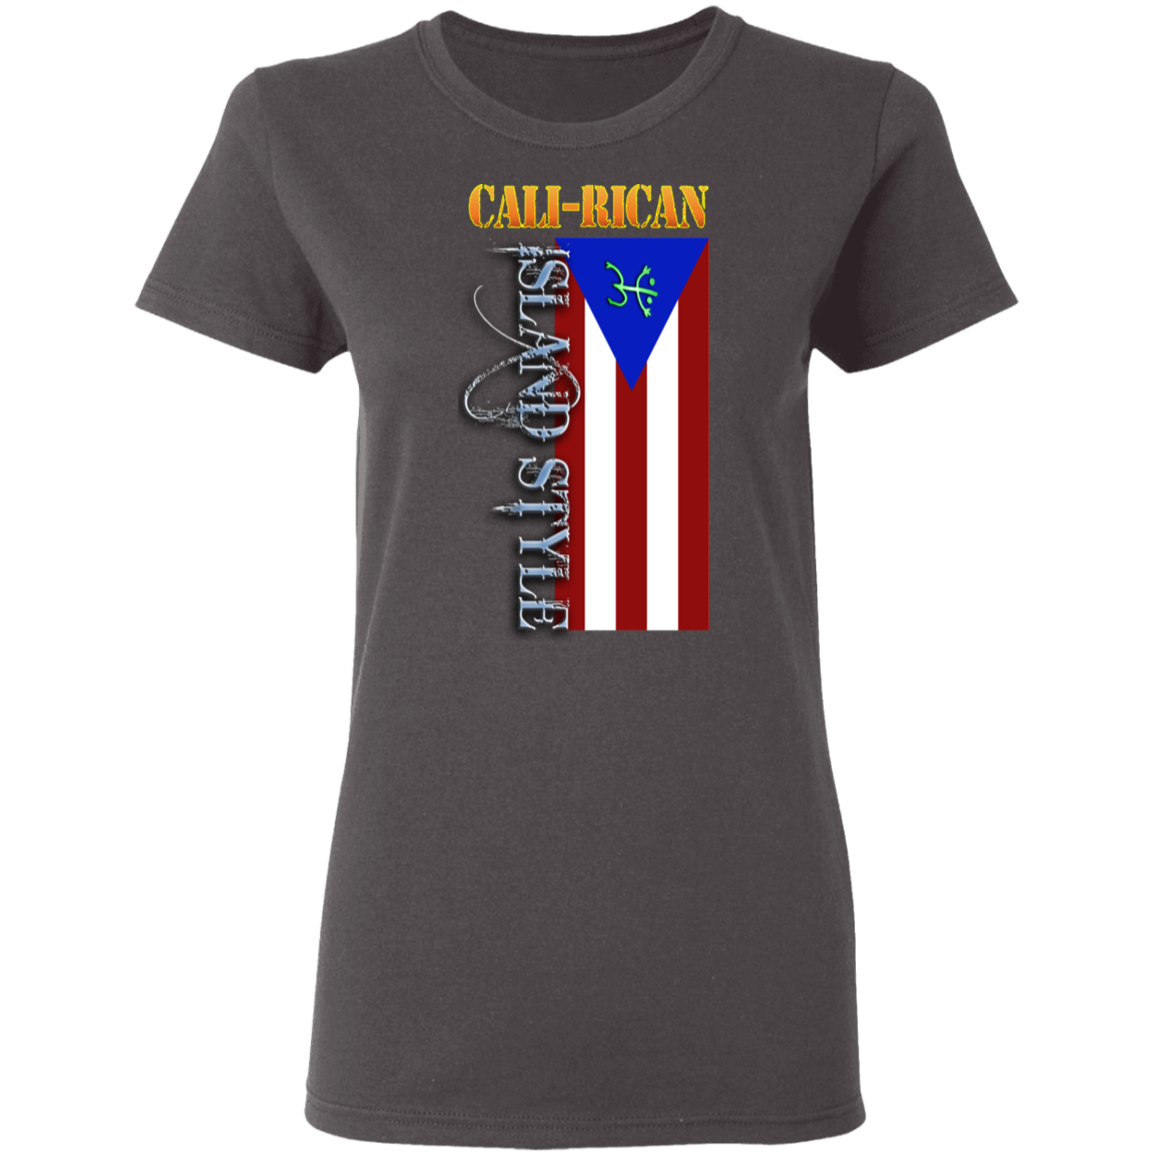 CALI-RICAN Ladies' 5.3 oz. T-Shirt